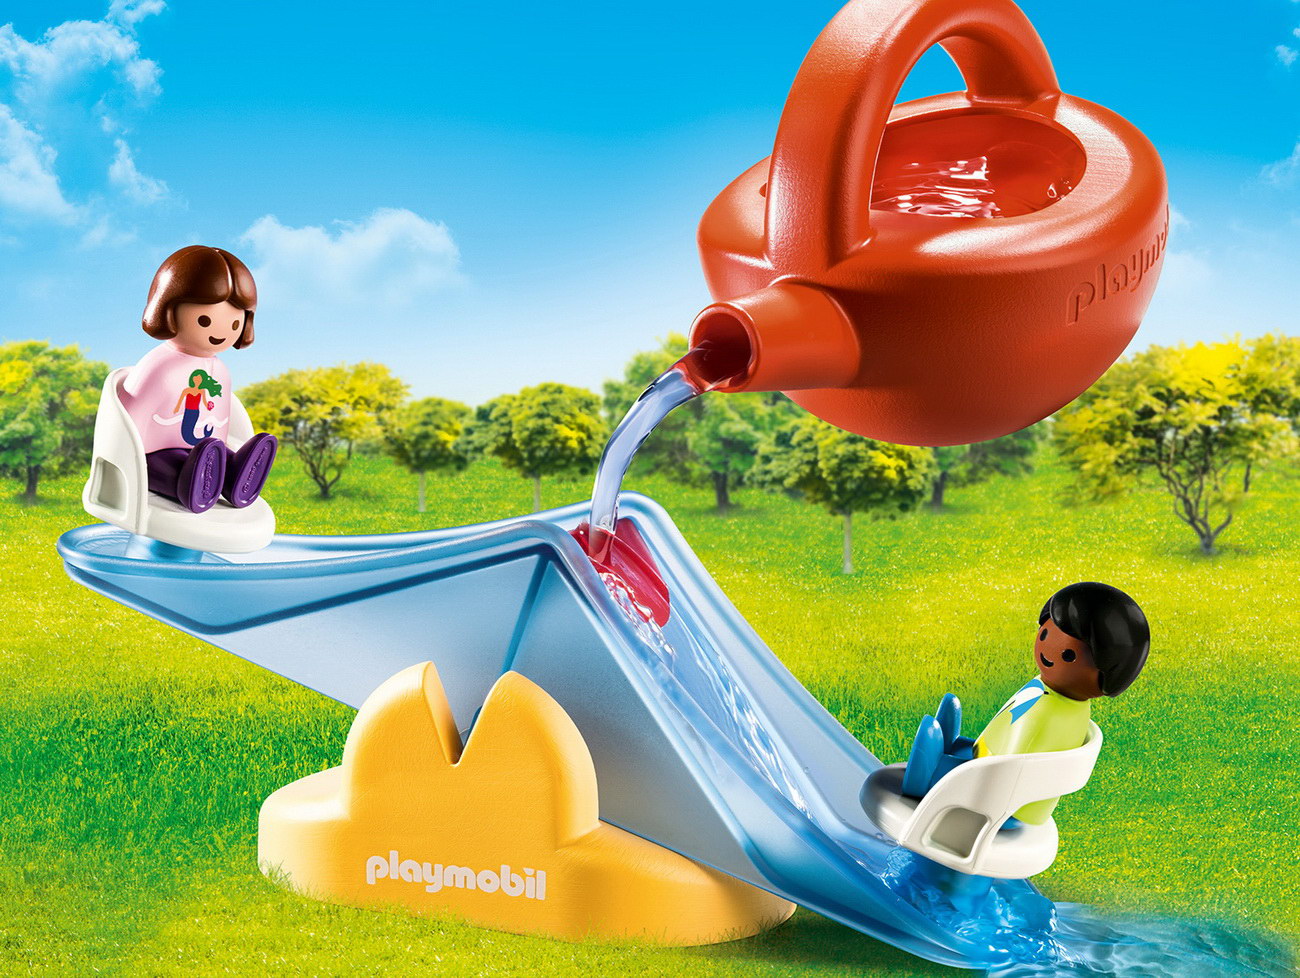 Playmobil 70269 - Wasserwippe mit Gießkanne - 1.2.3 / Aqua